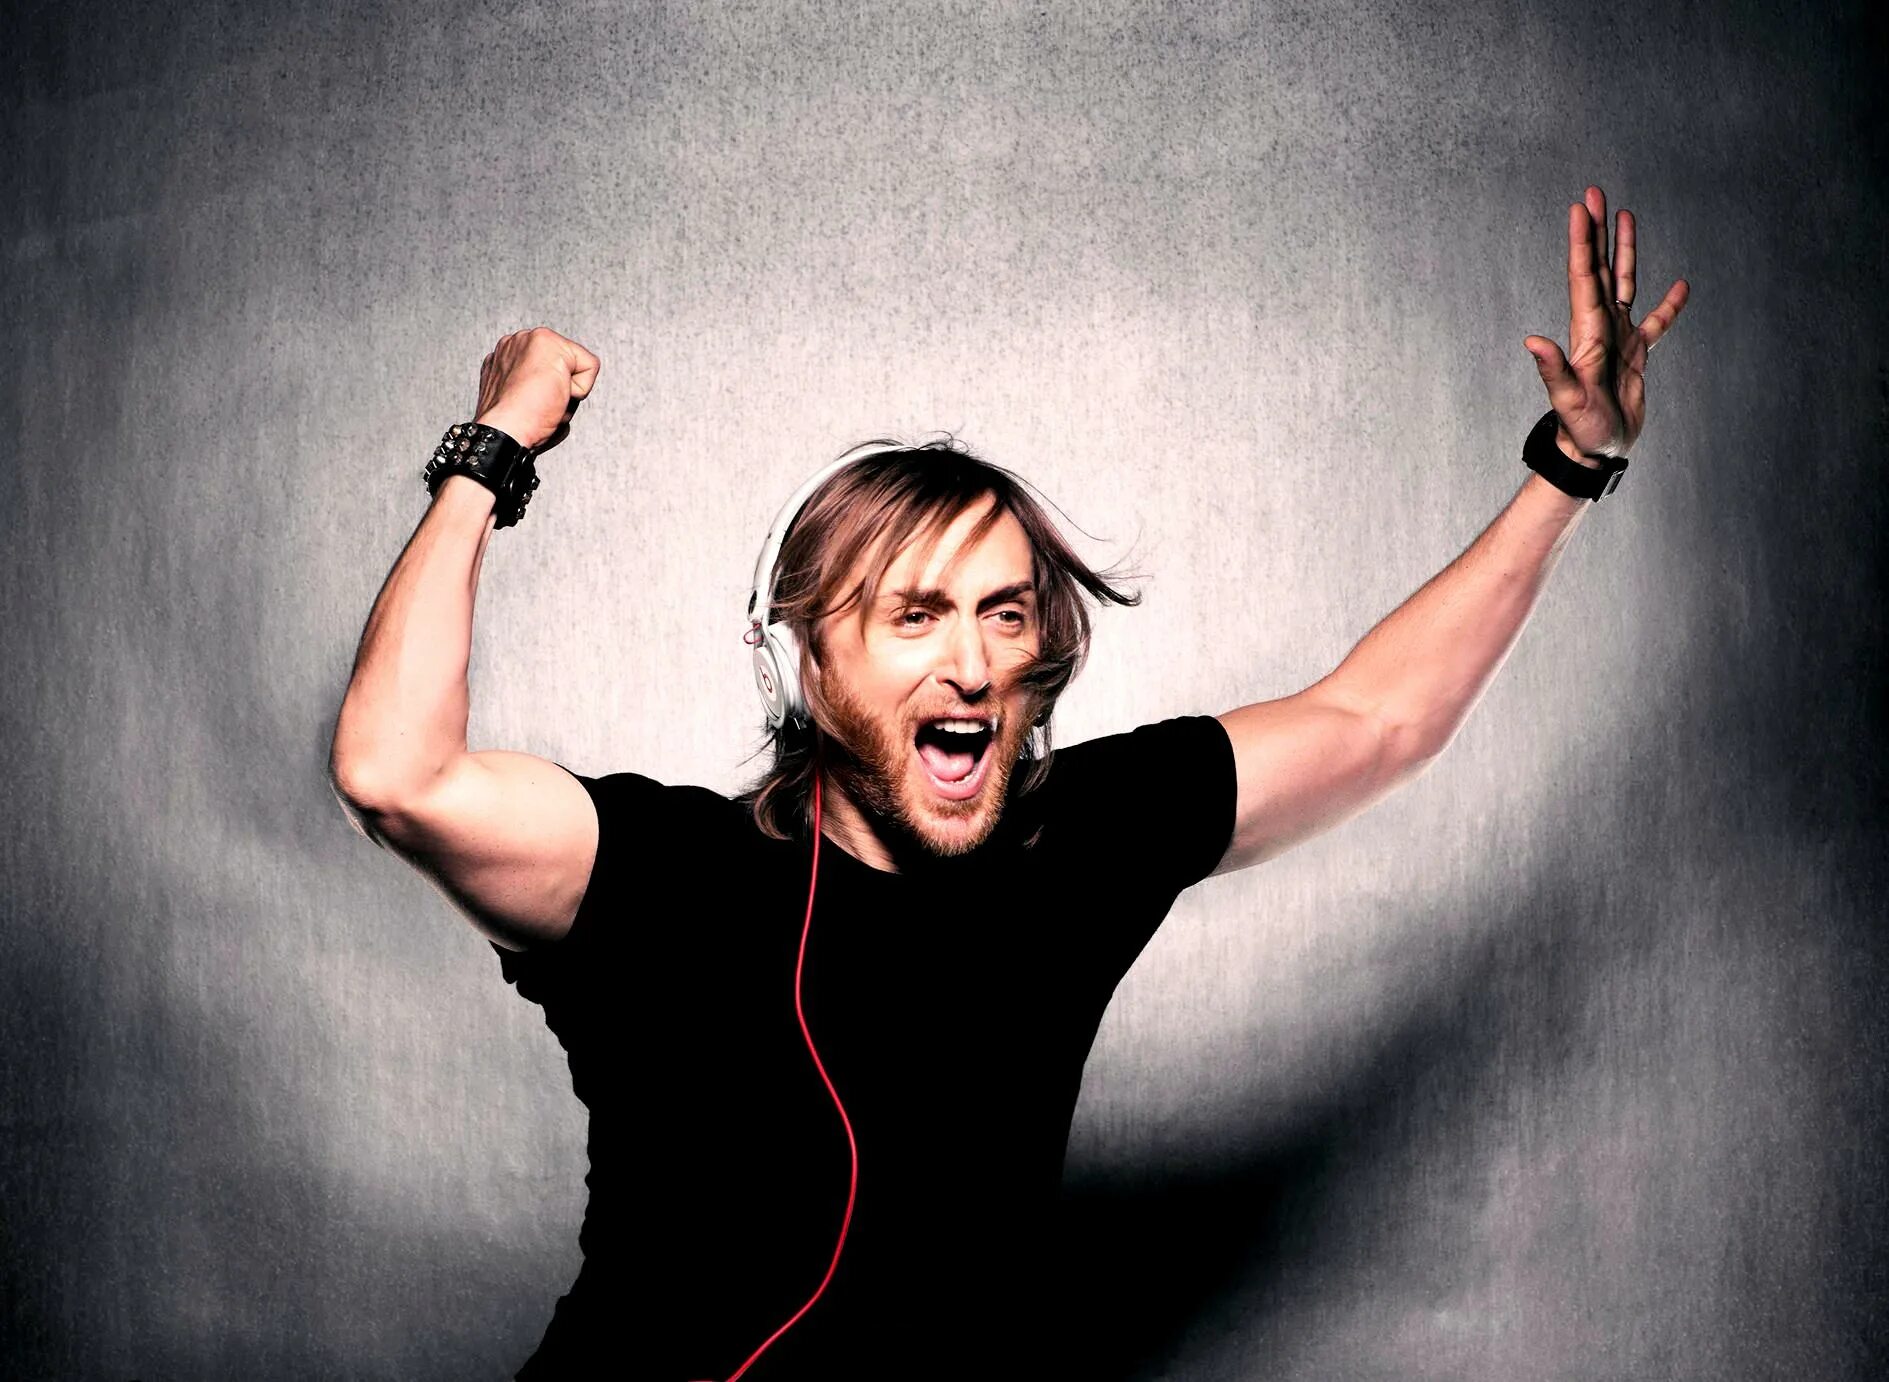 David Guetta. Дэвид Гетта группа. Дэвид Гетта фото. Дэвид Гетта 2014.